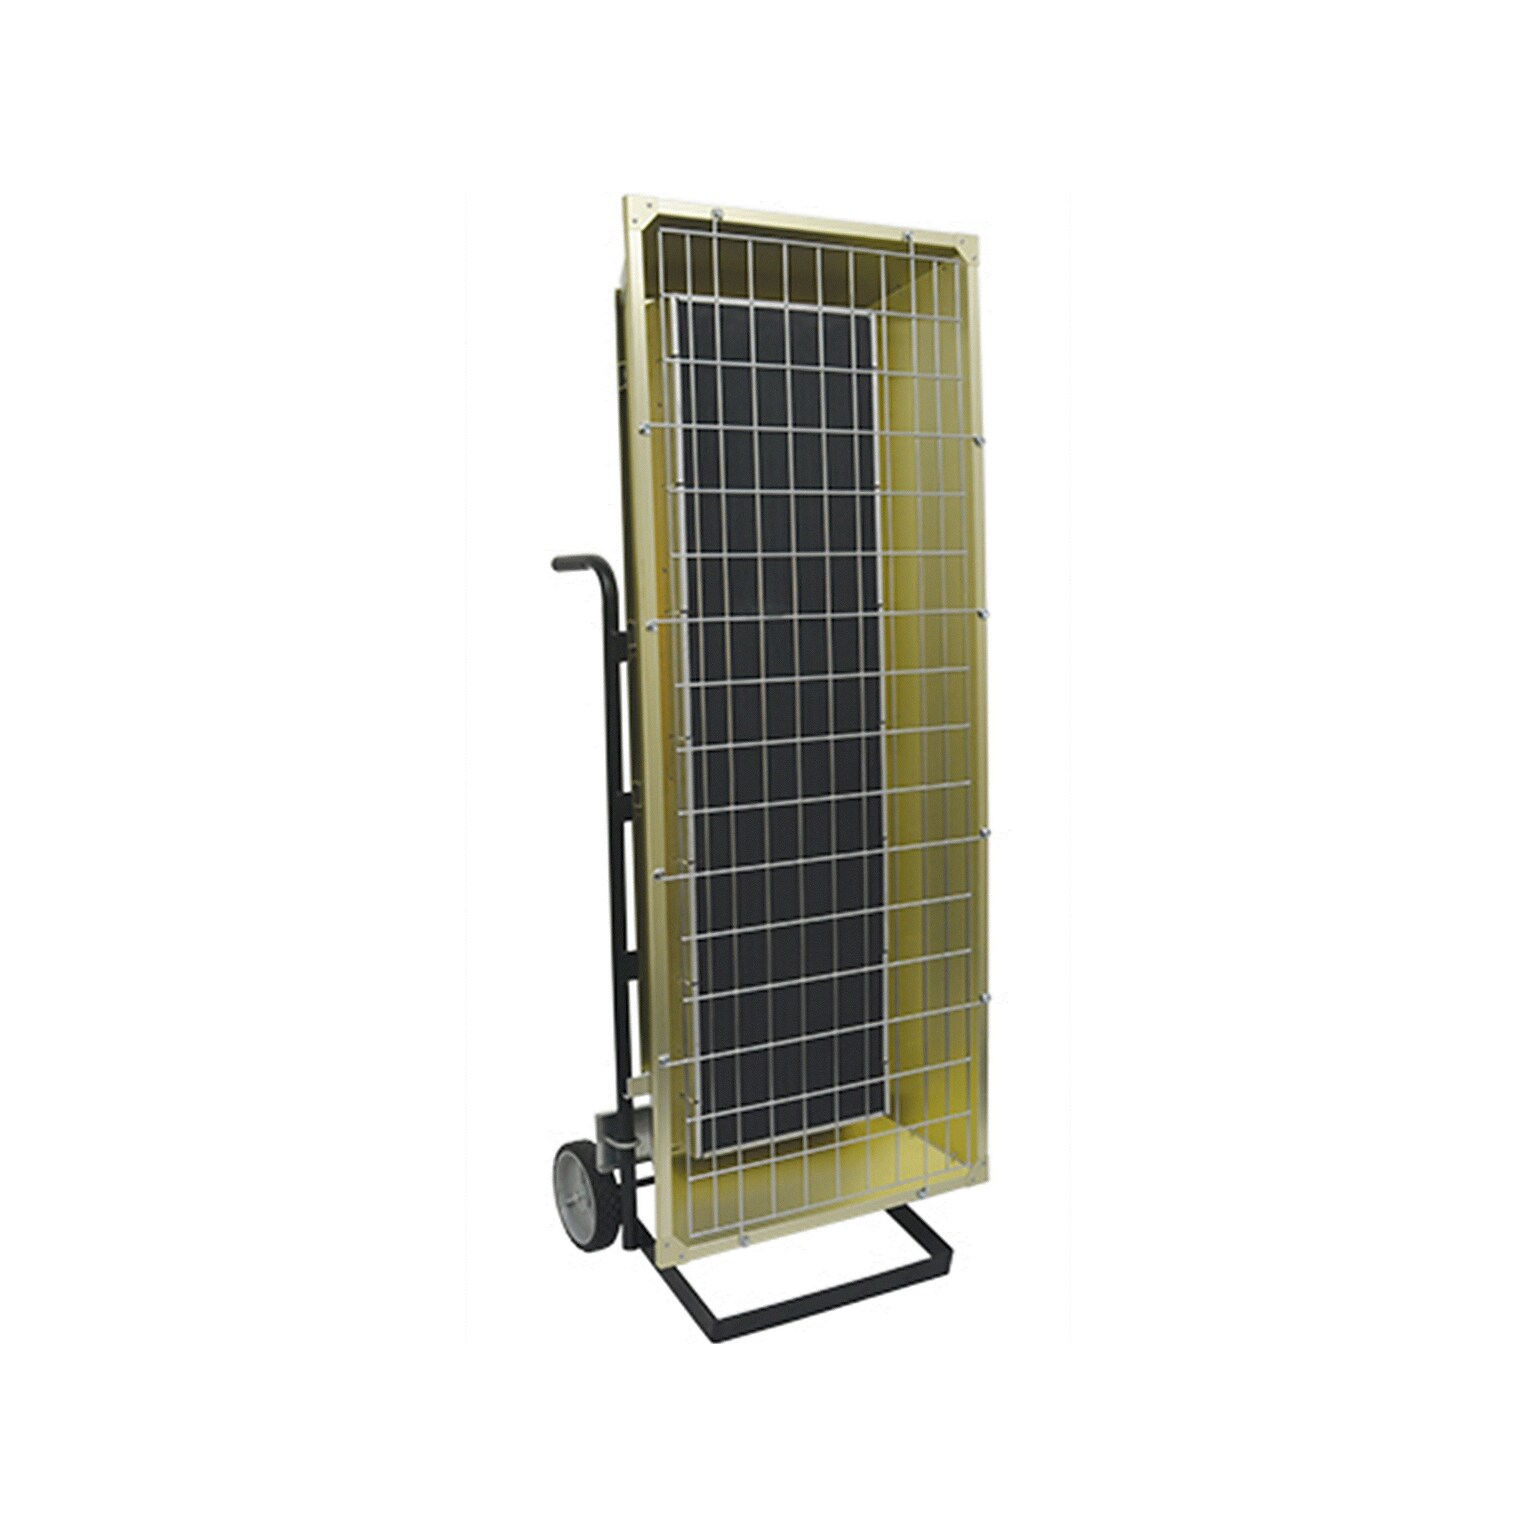 TPI Corporation Fostoria FSP 9500-Watt 32414 BTU Portable Indoor/Outdoor Infrared Electric Heater, Gold (04884802)